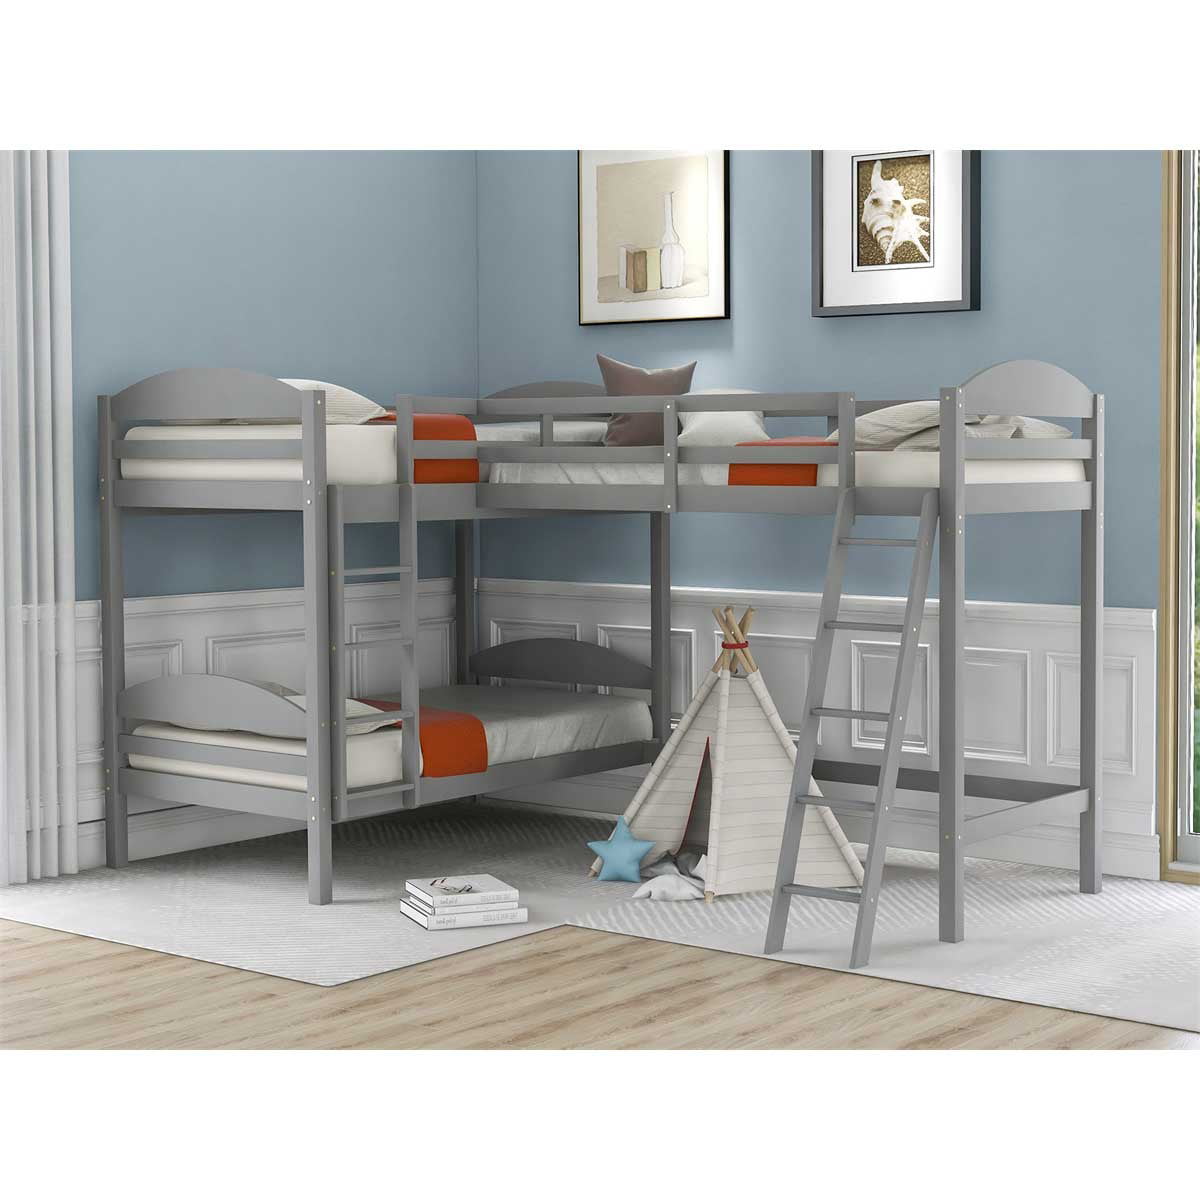 Triple Bunk Bed Wooden Loft, Three Bed Bunk Beds